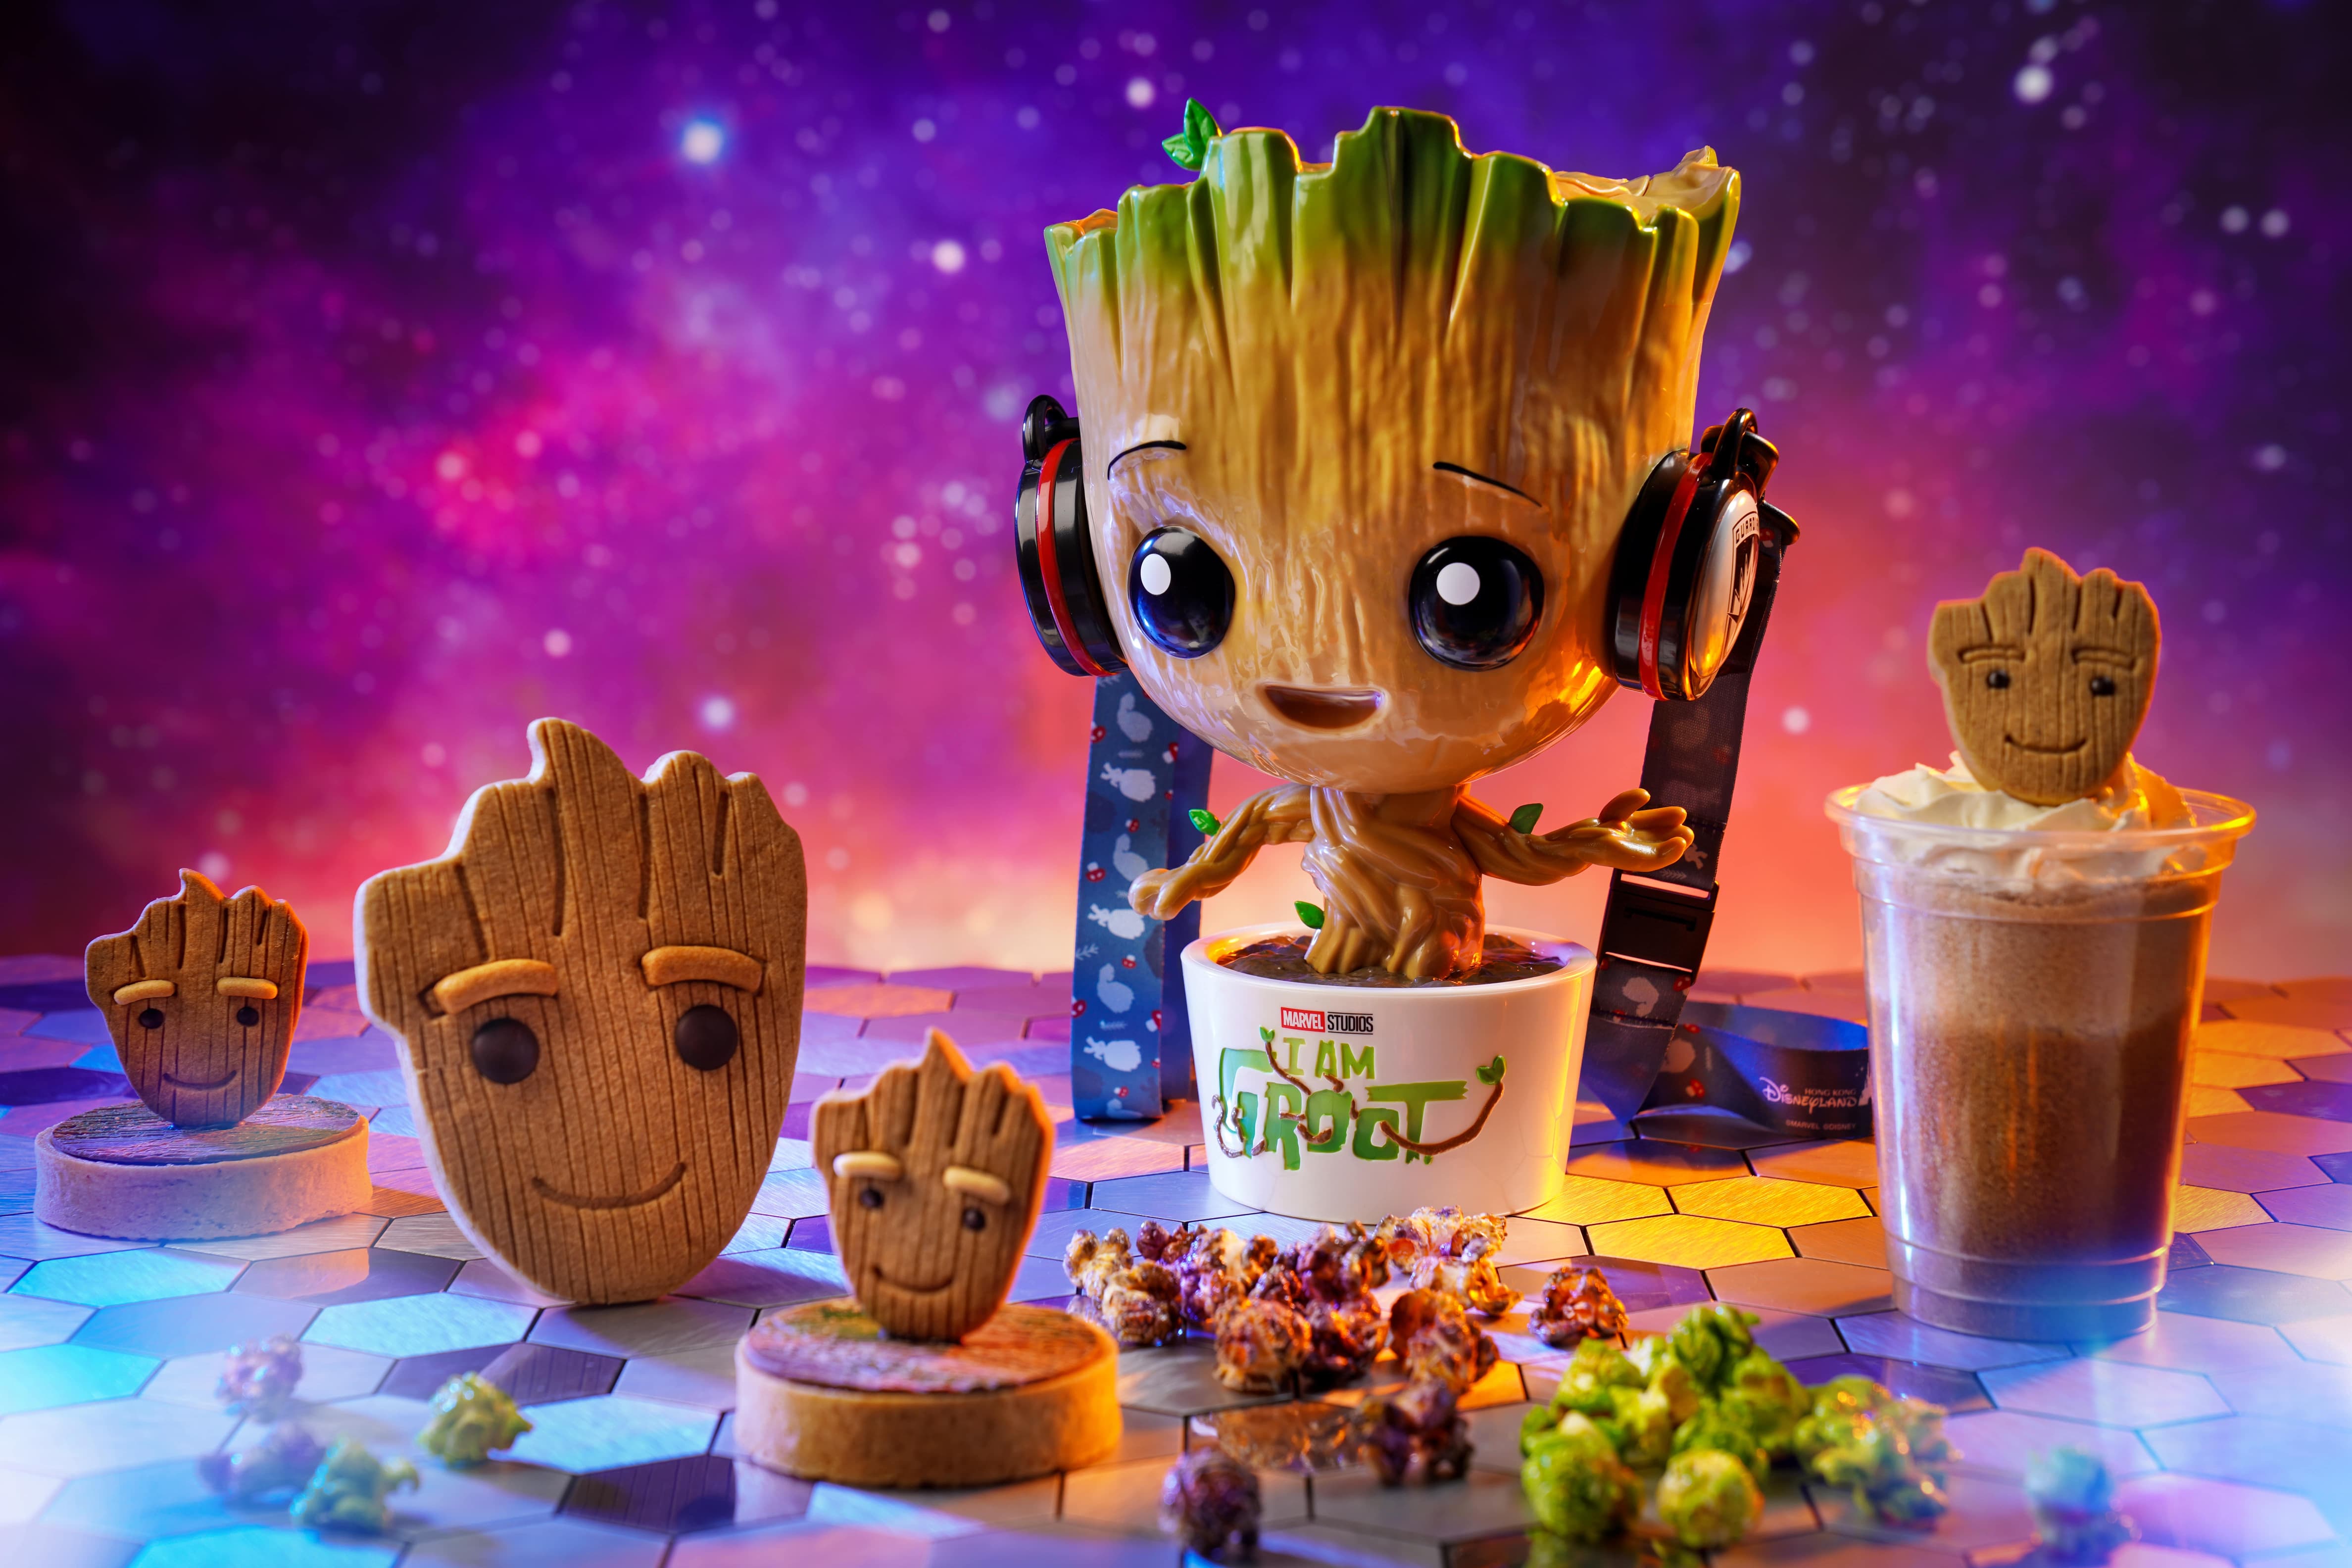 Groot-themed snacks